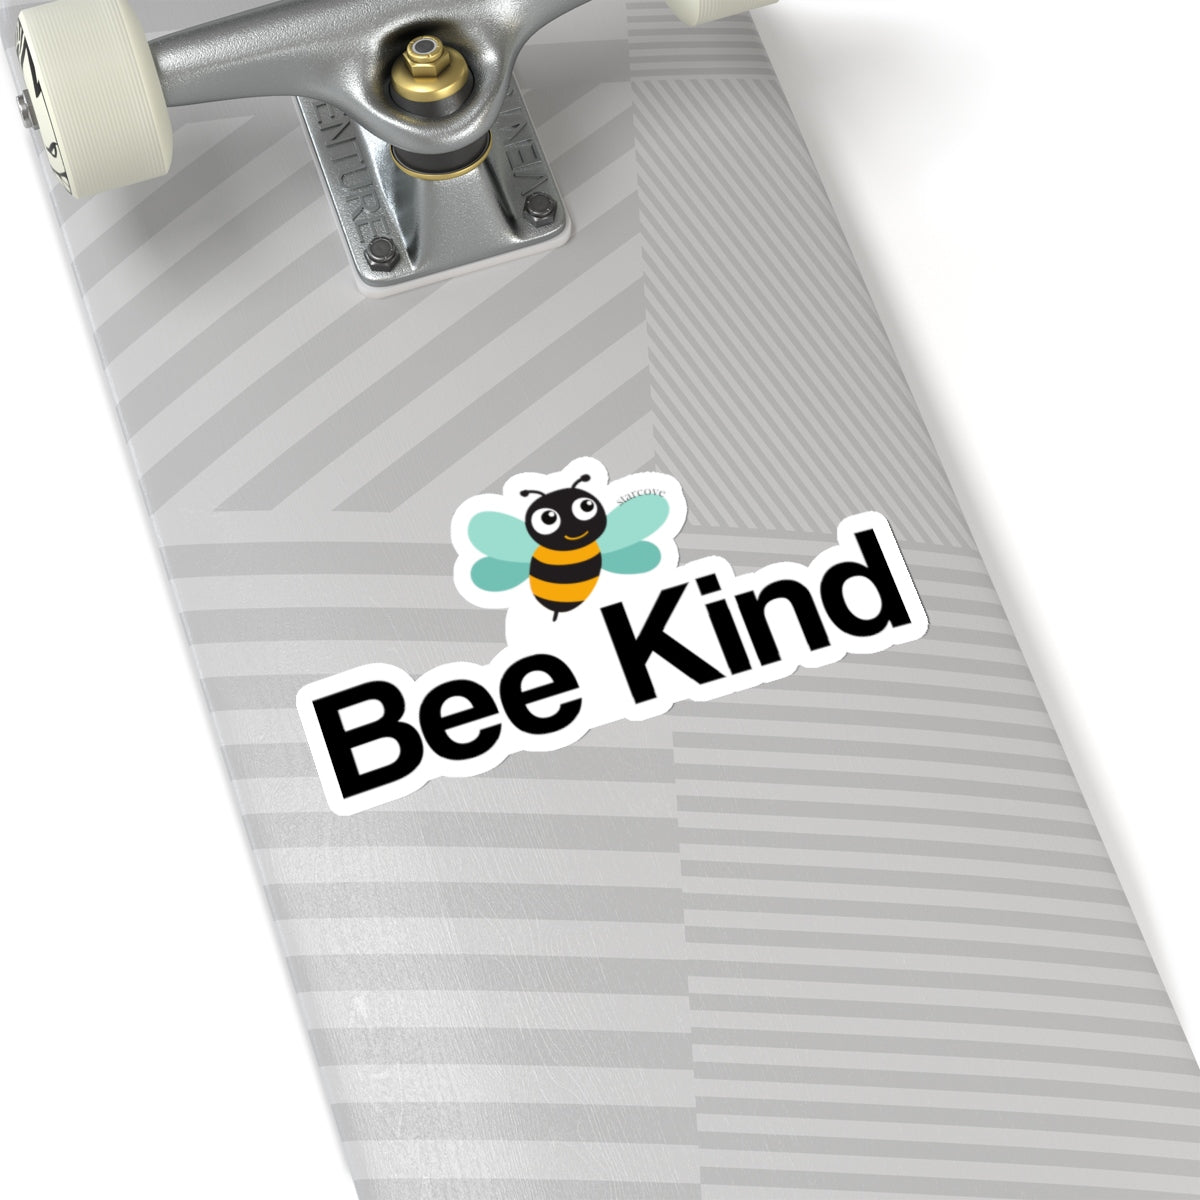 Bee Kind Sticker, Be Kind Vinyl Decal, Bumper Car Laptop Sign, Choose Kind, Cute Positive Waterproof Waterbottle  Kiss-Cut Stickers Starcove Fashion